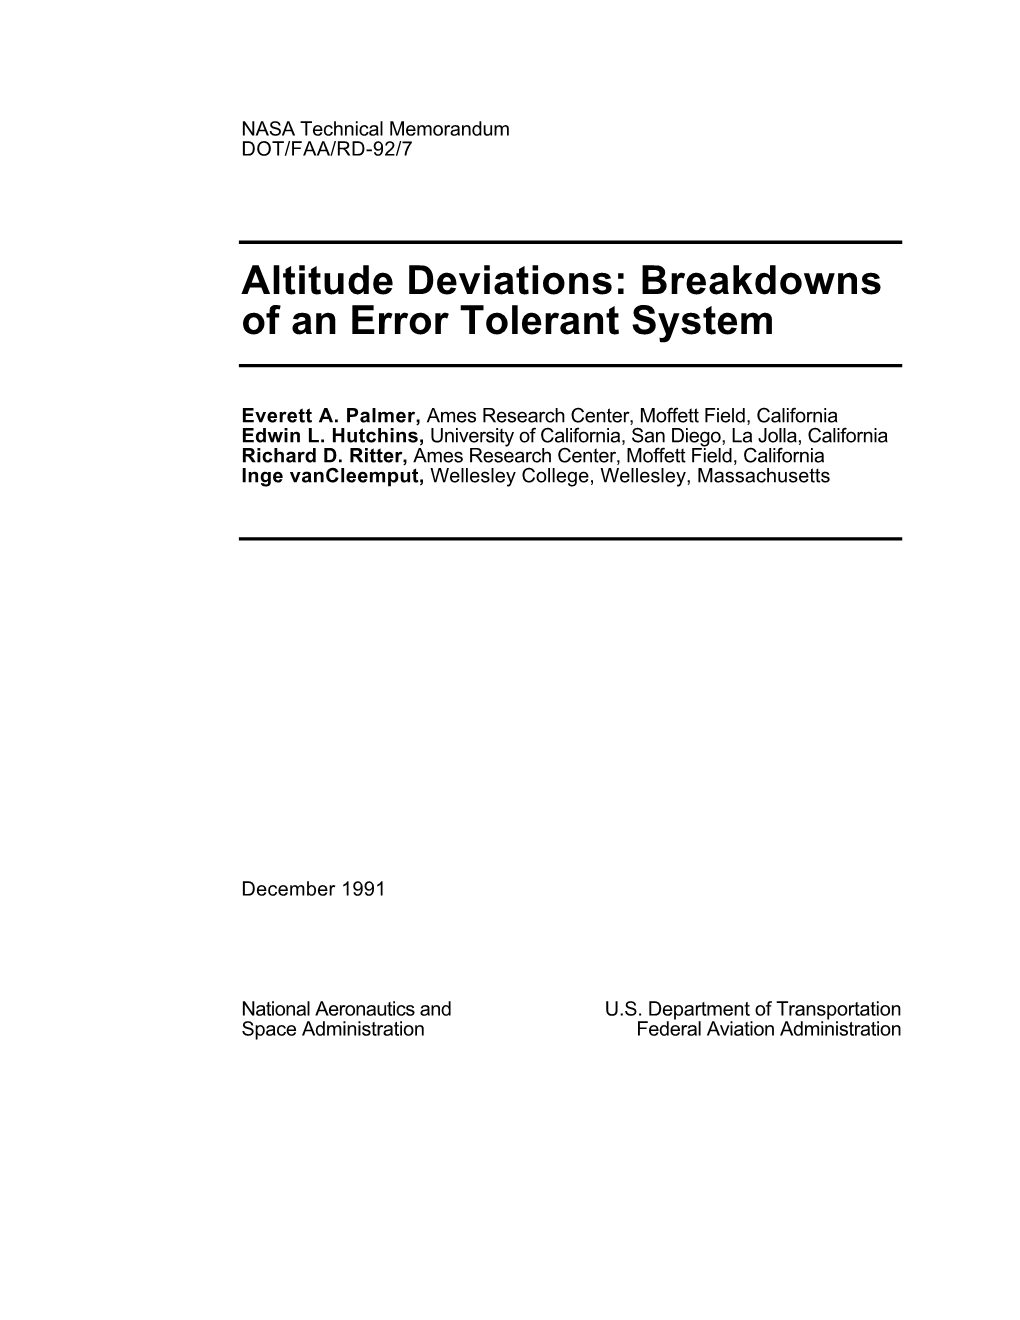 Altitude Deviations: Breakdowns of an Error Tolerant System